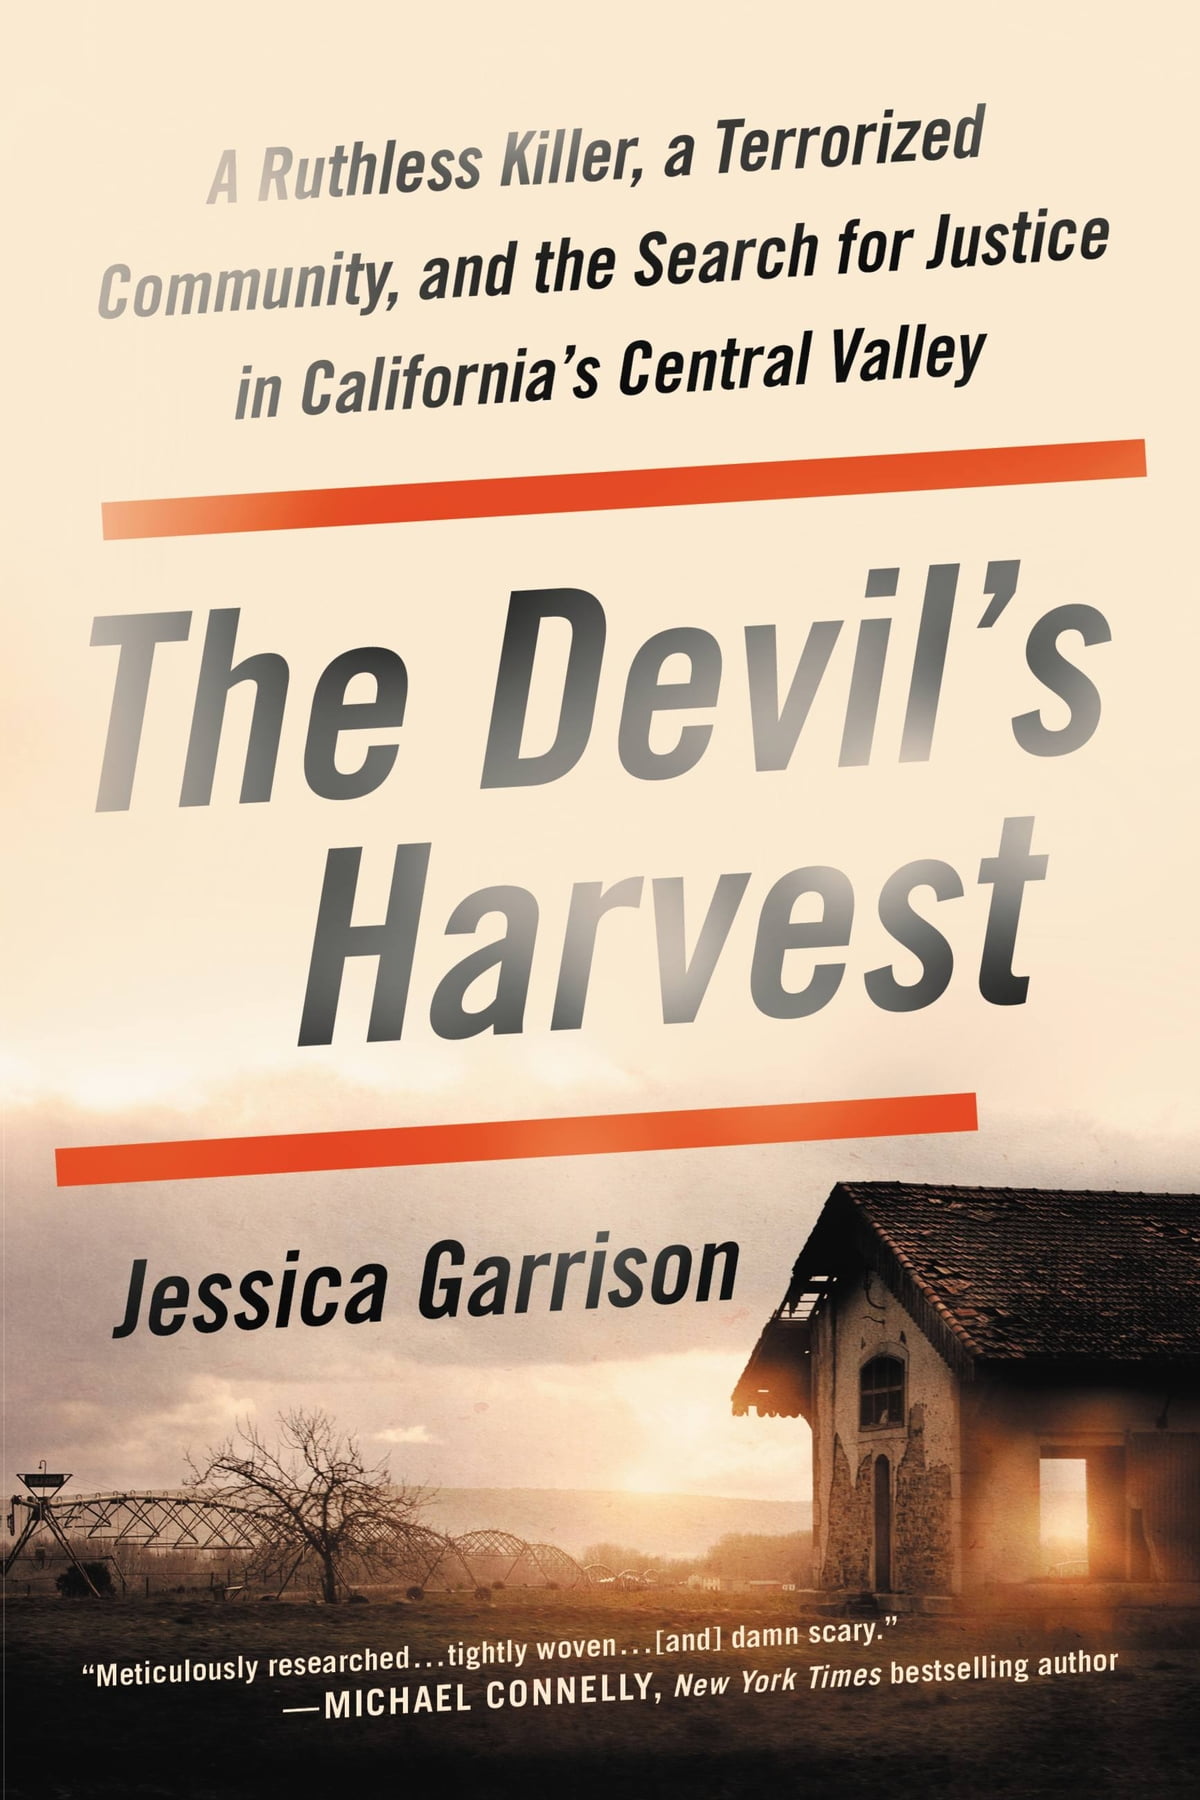 The Devil's Harvest by Jessica Garrison